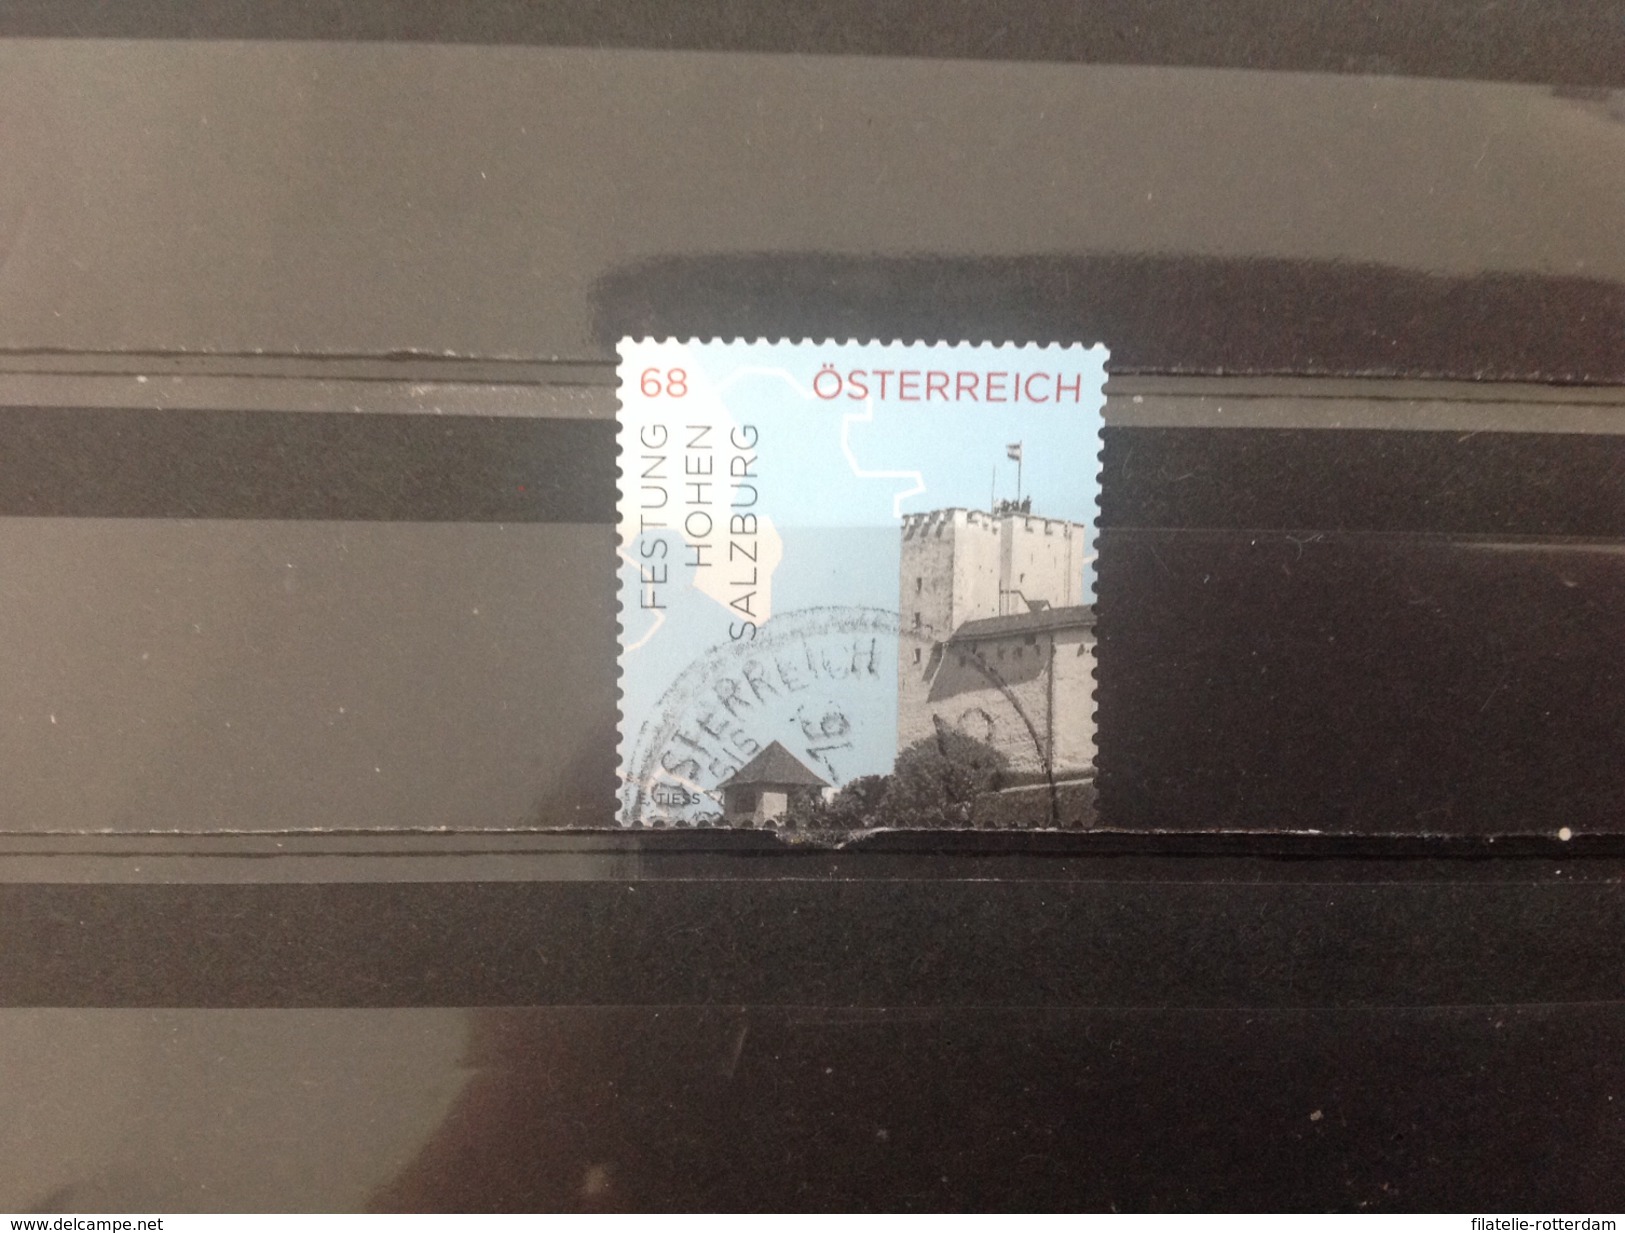 Oostenrijk / Austria - Vesting Hohensalzburg (68) 2015 - Used Stamps